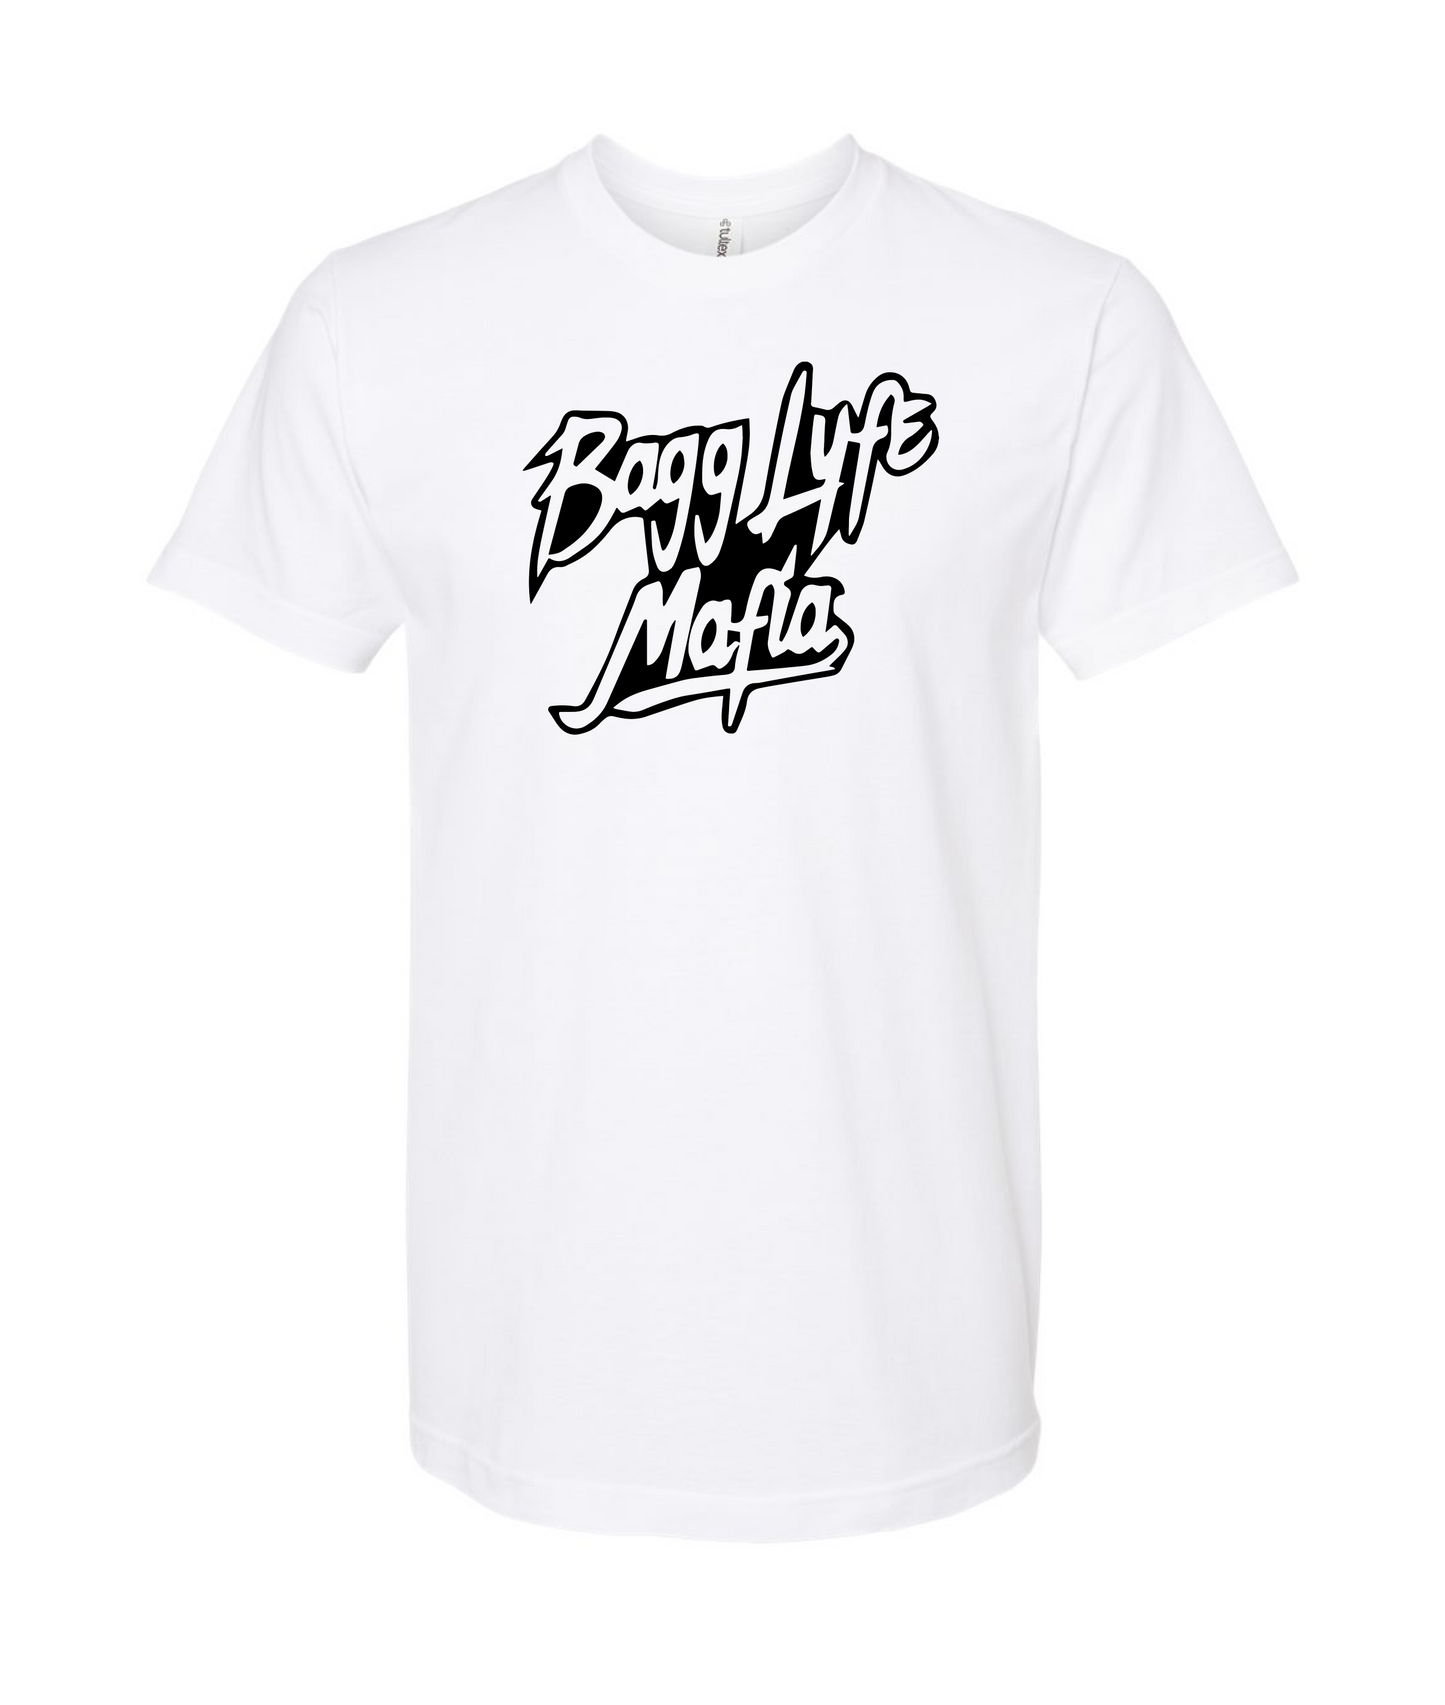 Bagglyfe Mafia Clothing - Logo - White T-Shirt